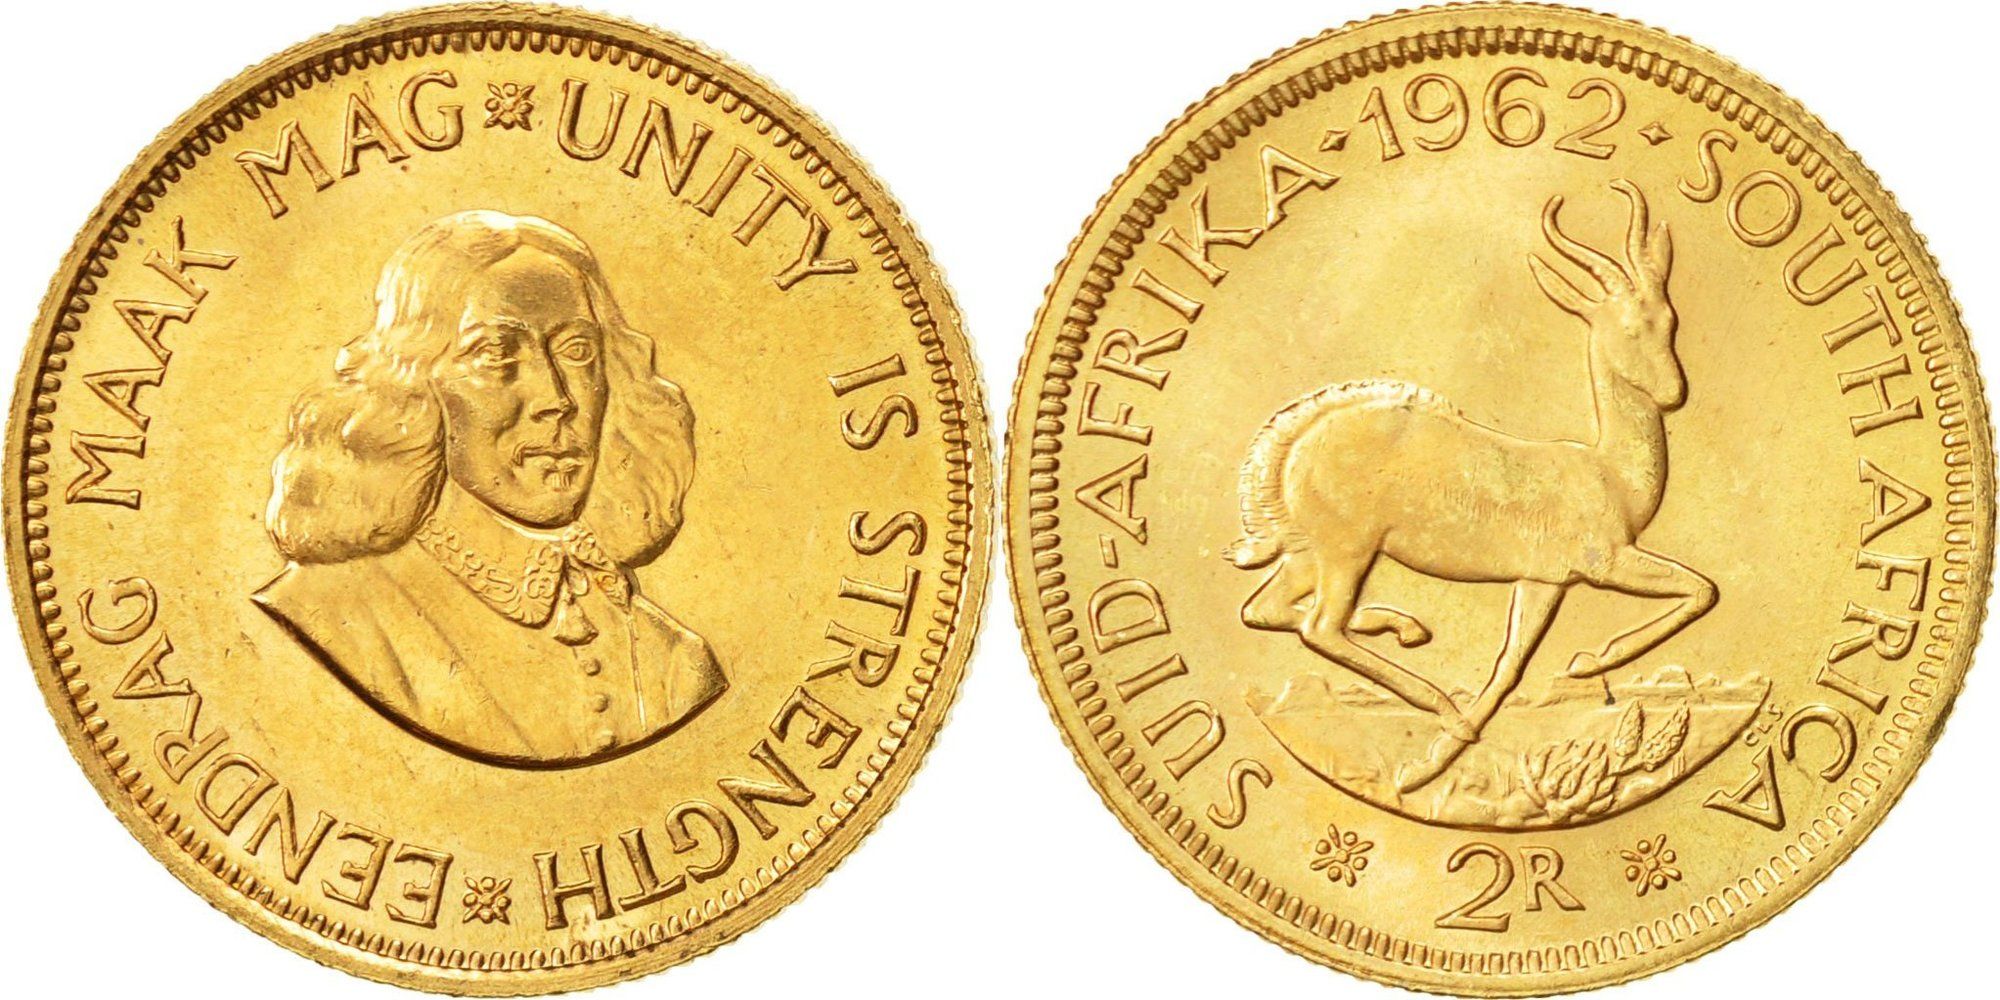 2 Gold Rand